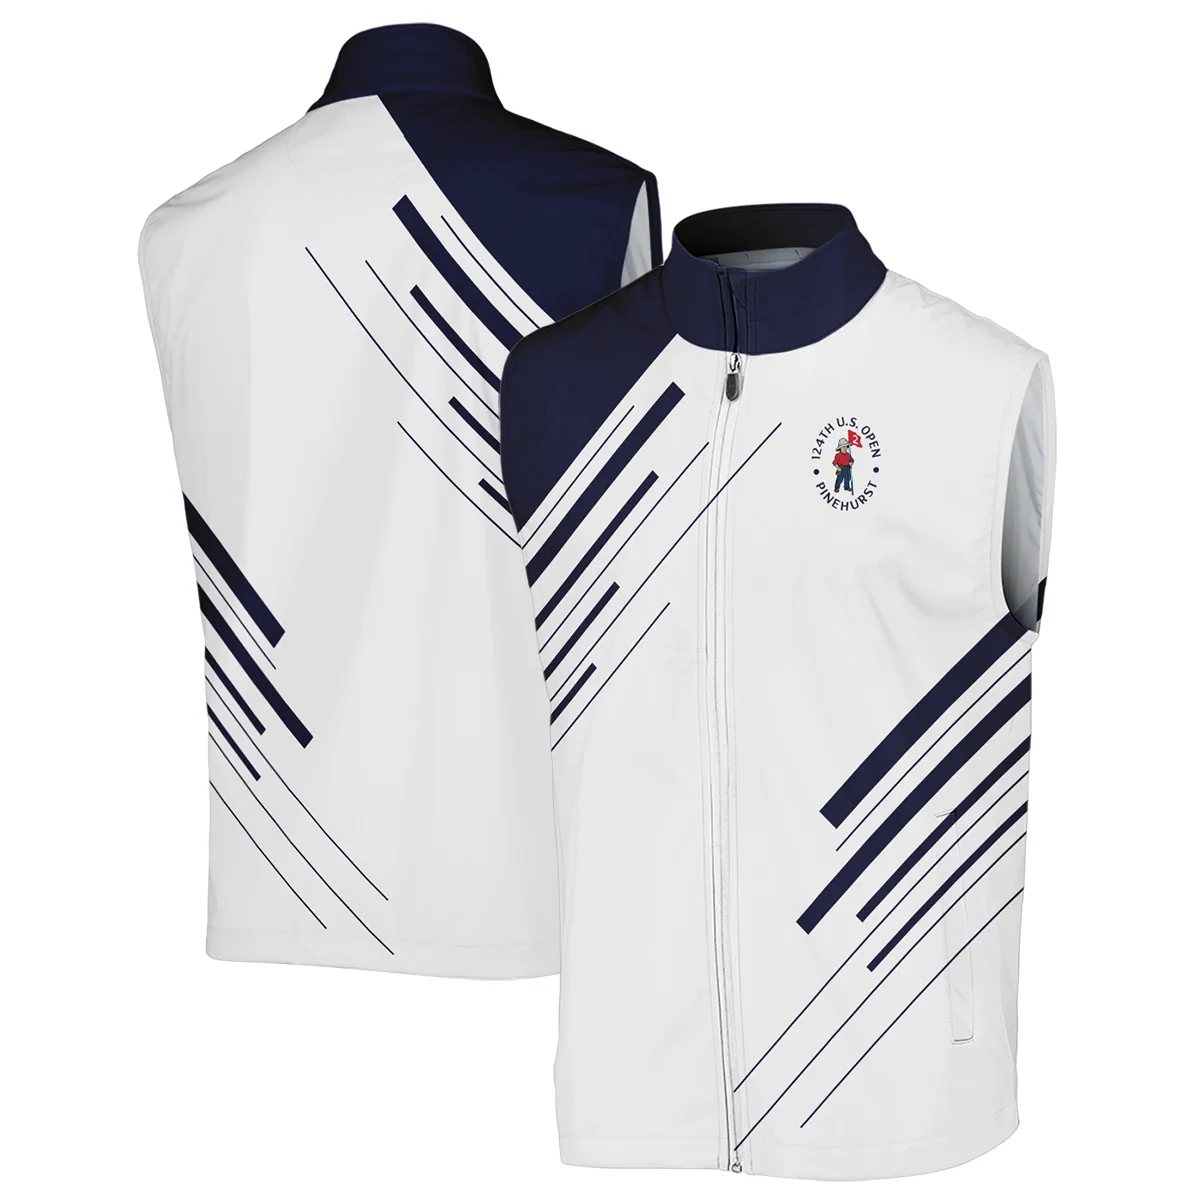 Titleist 124th U.S. Open Pinehurst Golf Sleeveless Jacket Striped Pattern Dark Blue White All Over Print Sleeveless Jacket